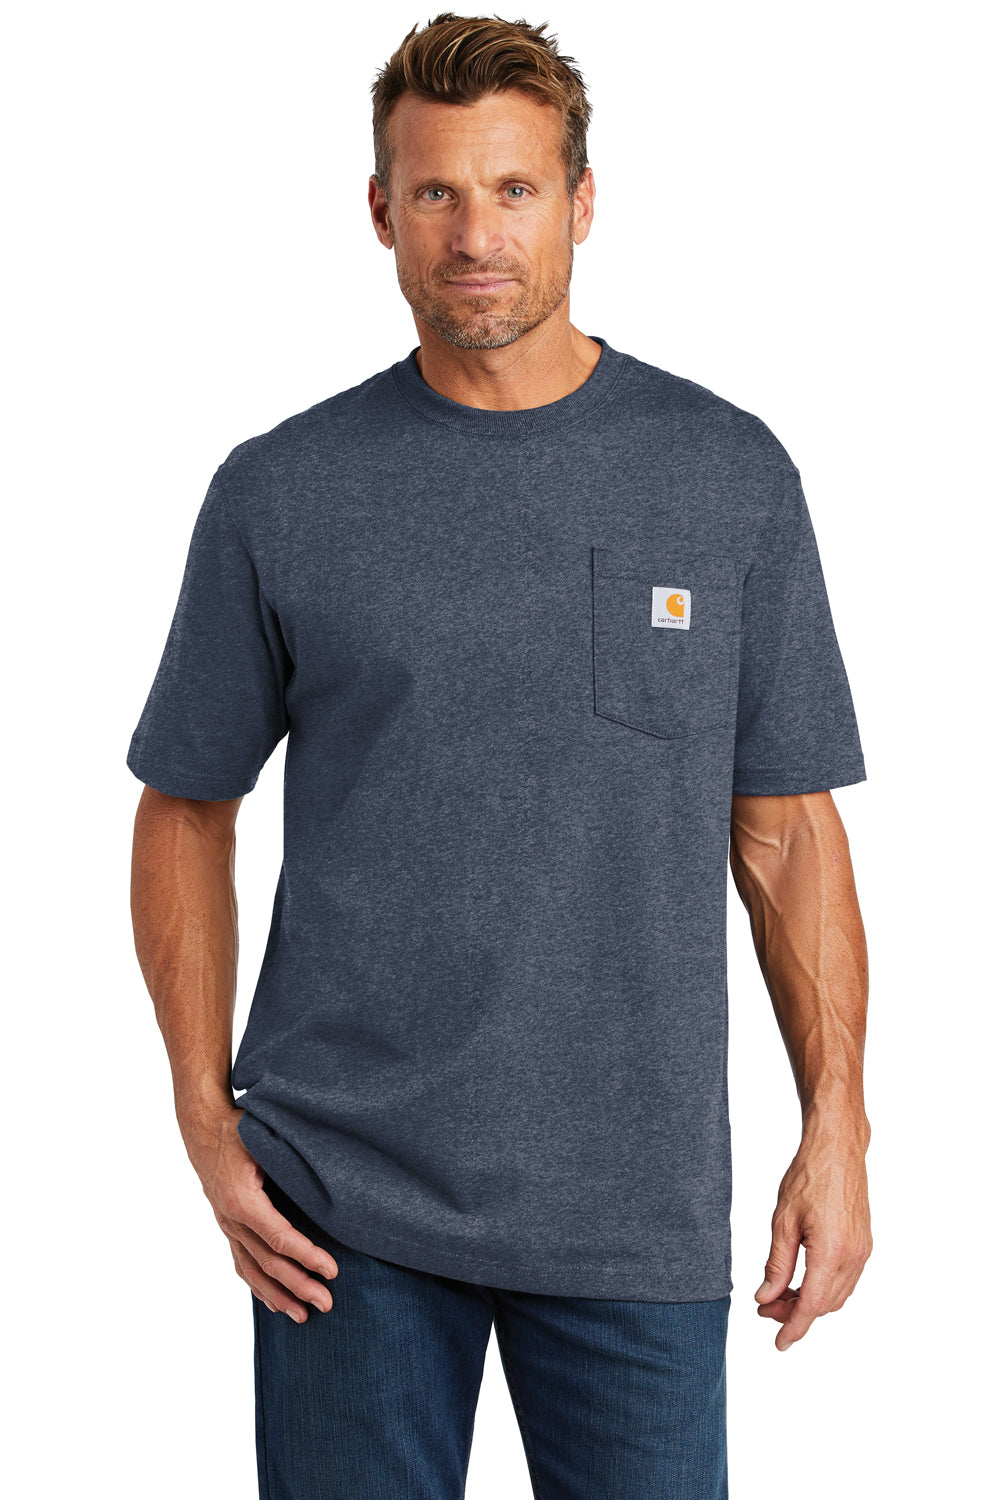 Carhartt CTK87 Mens Workwear Short Sleeve Crewneck T-Shirt w/ Pocket Heather Cobalt Blue Front